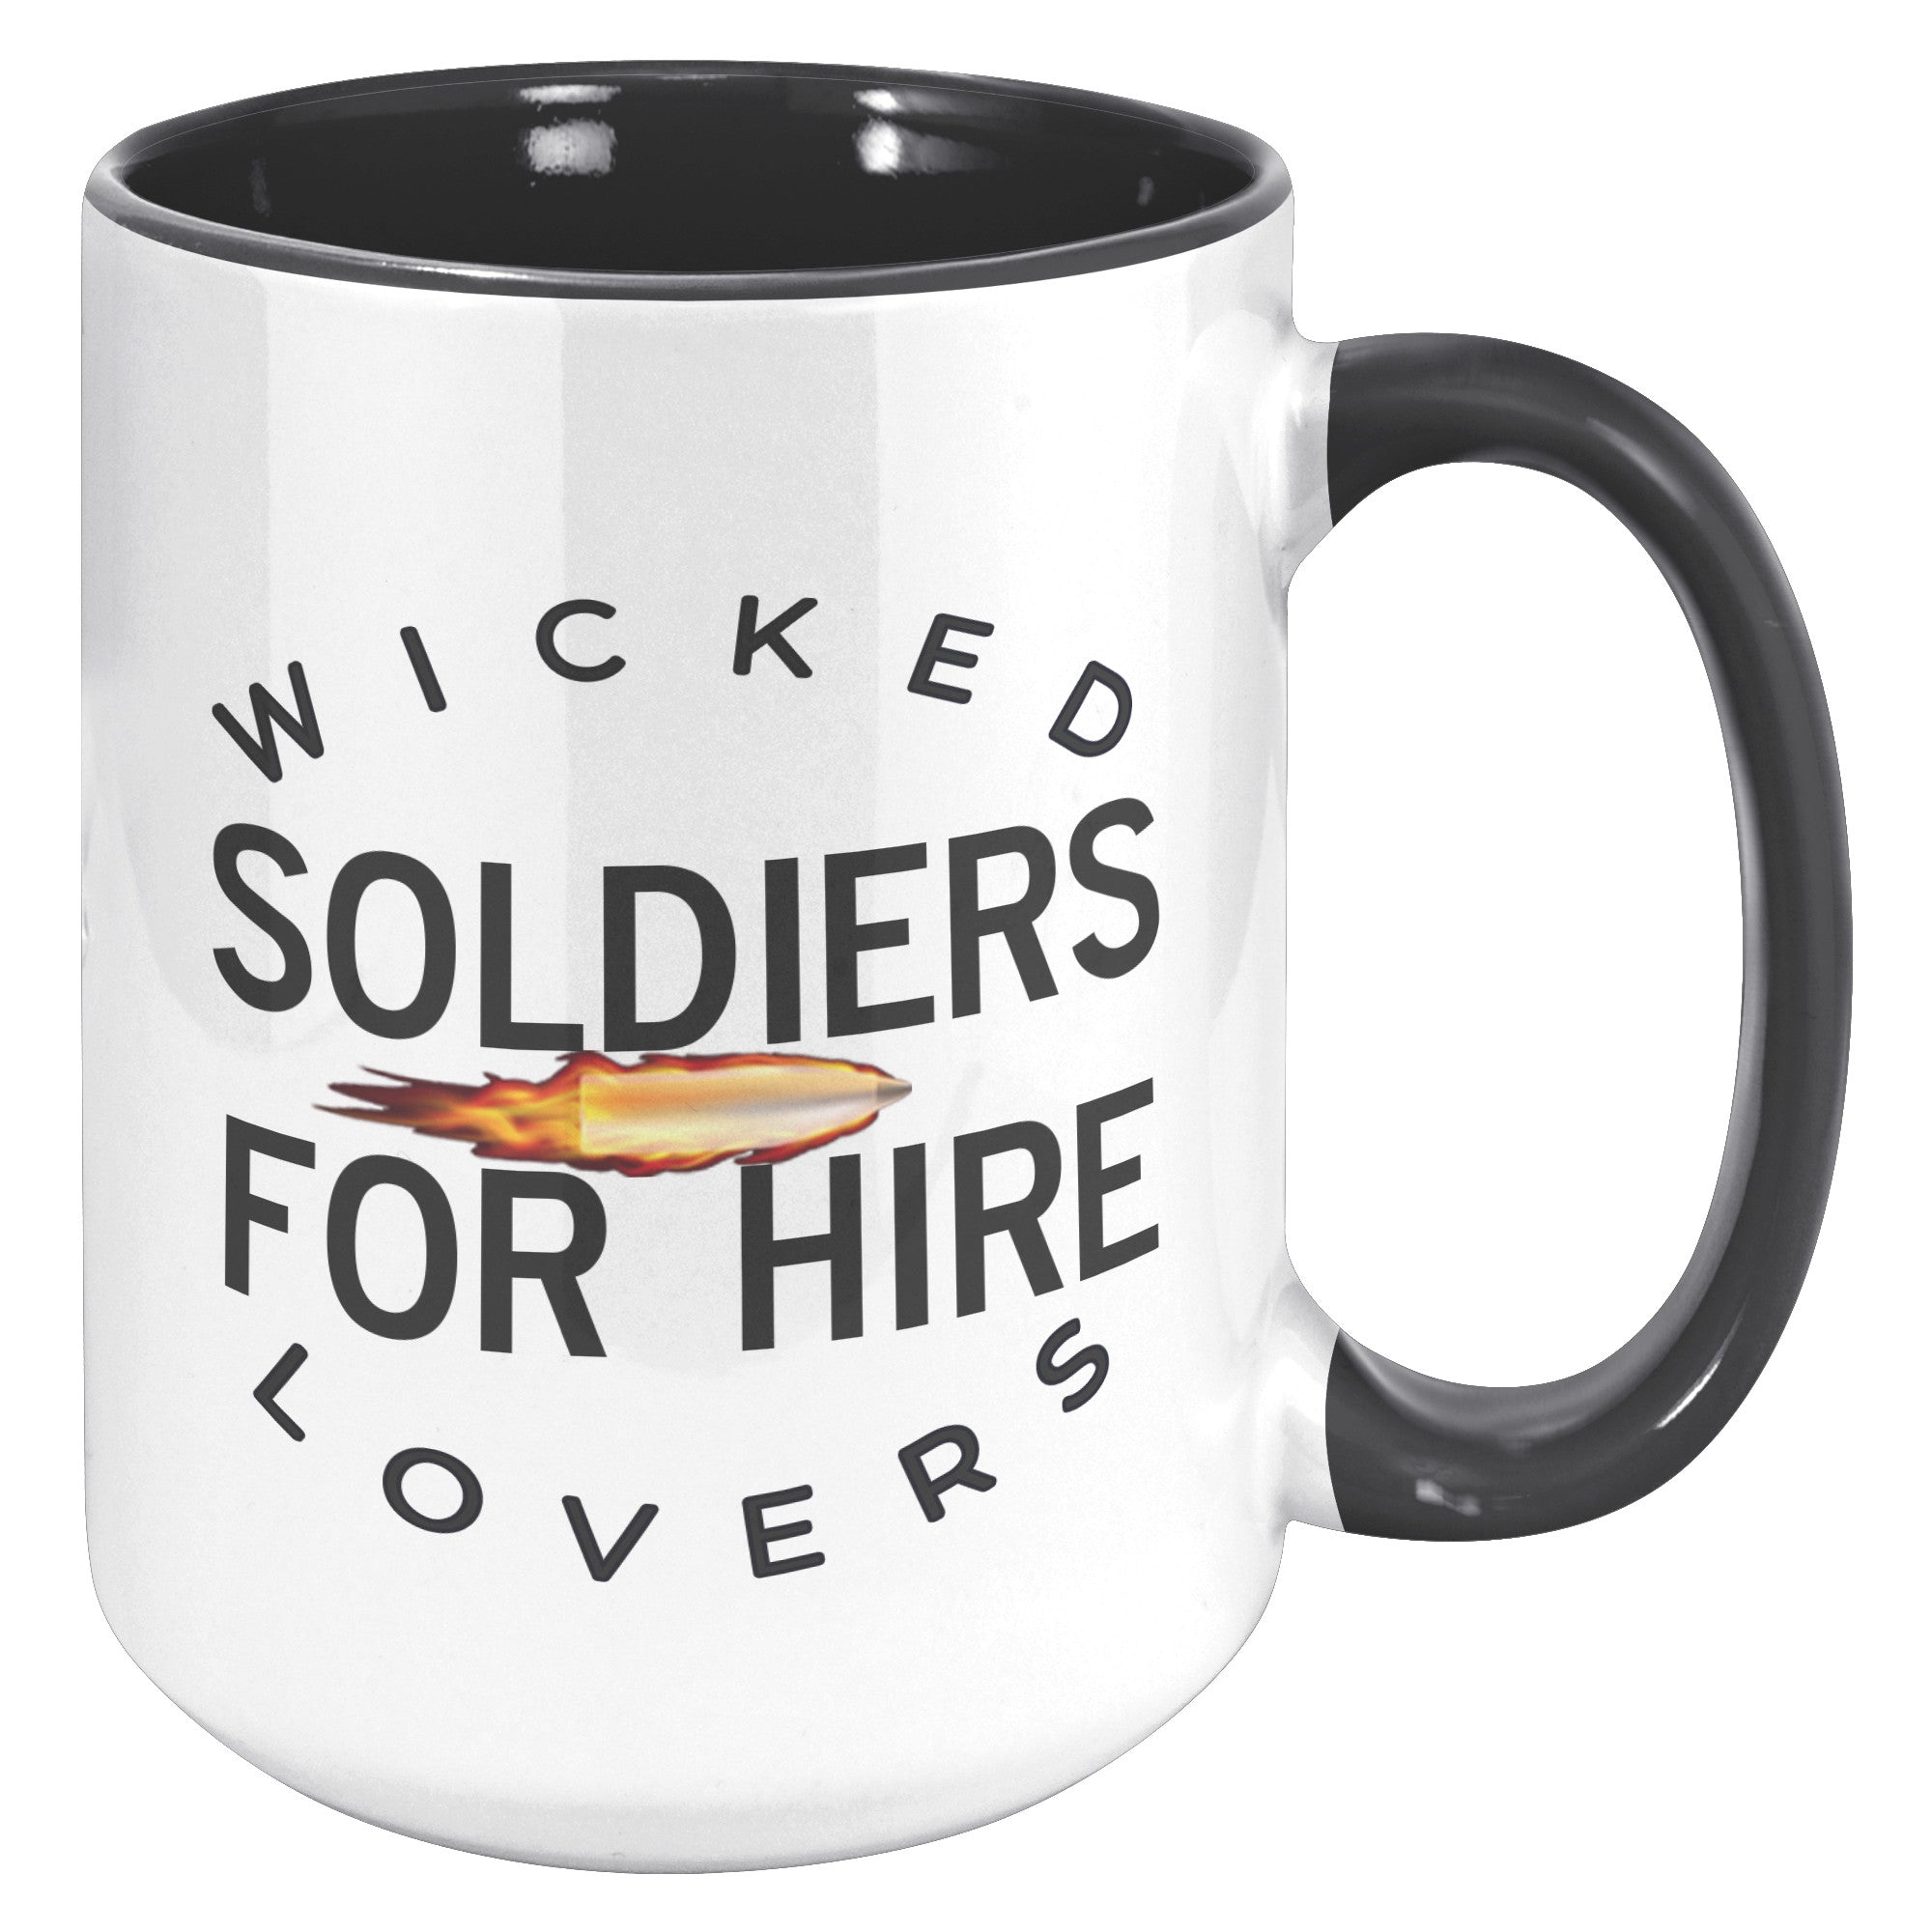 SOLDIERS FOR HIRE COFFEE MUG - 15oz.